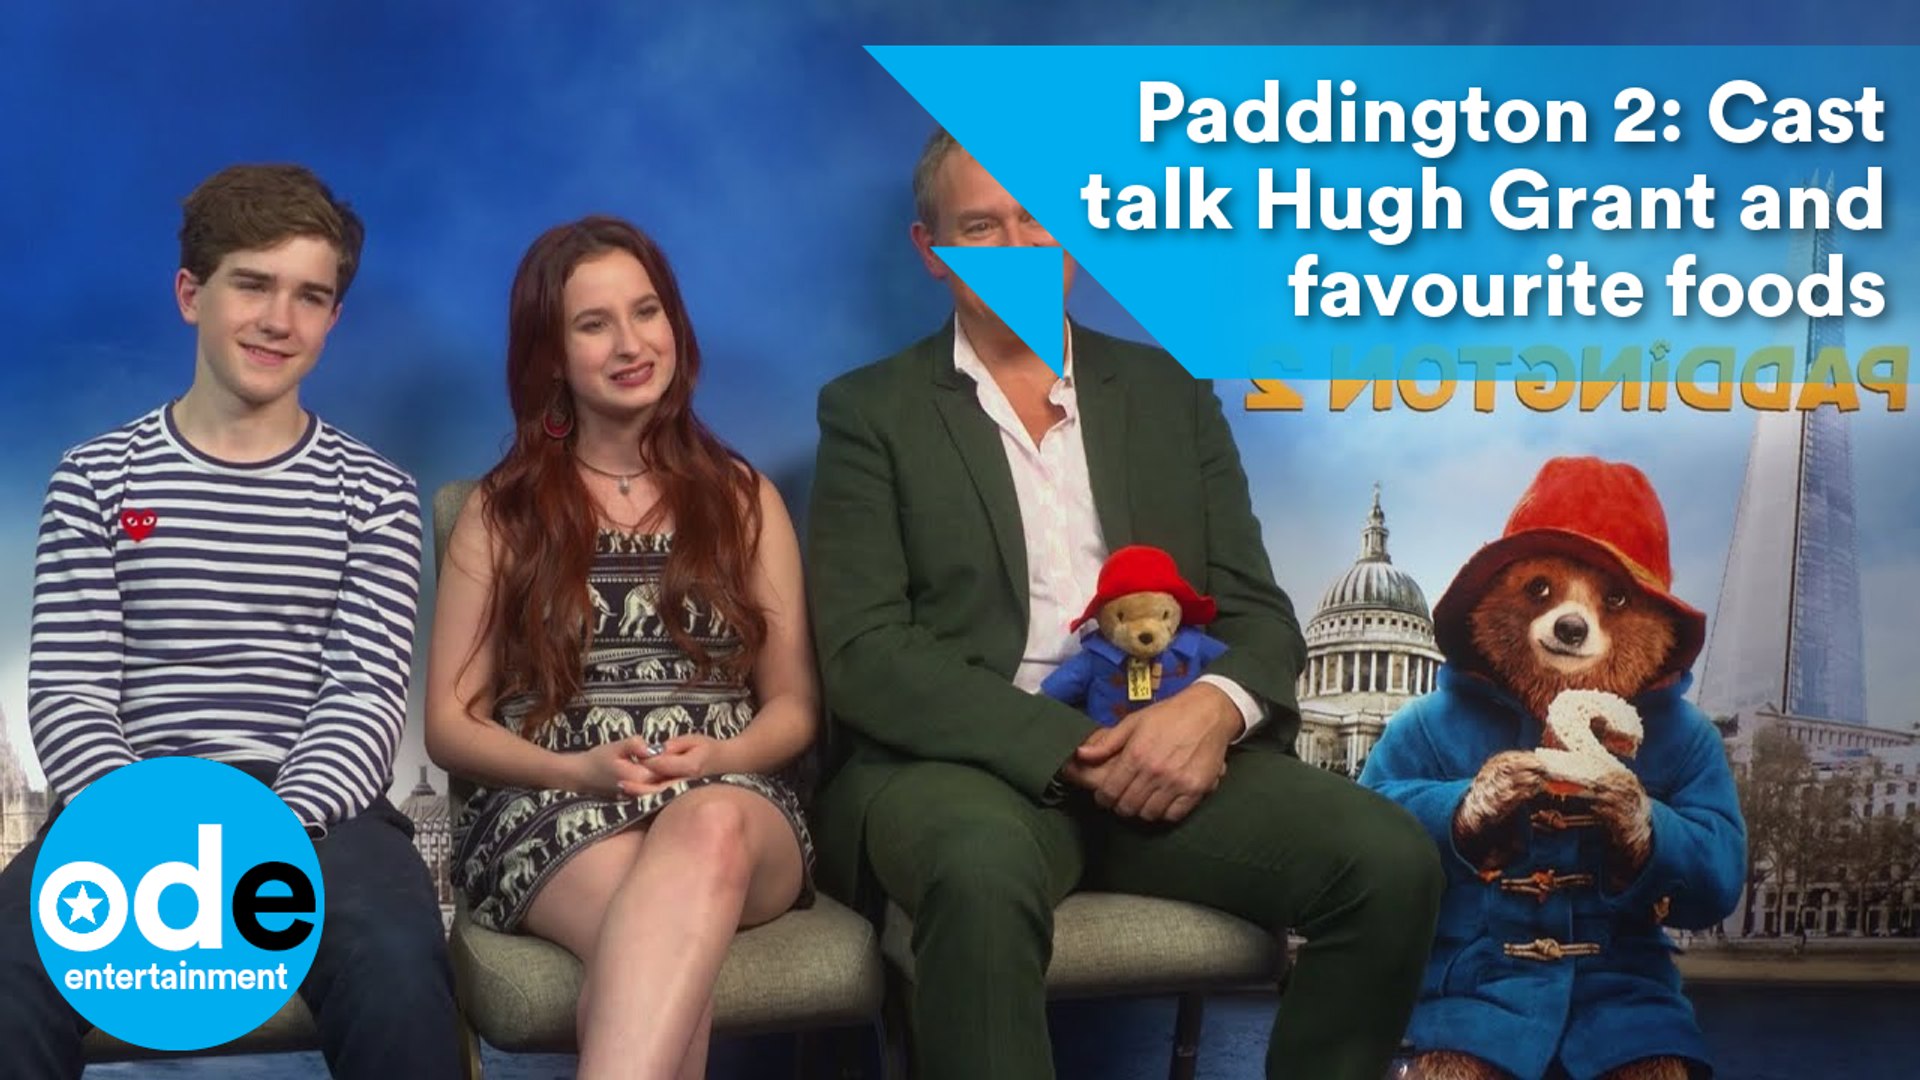 Paddington 2: Cast talk Hugh Grant and favourite foods - video Dailymotion